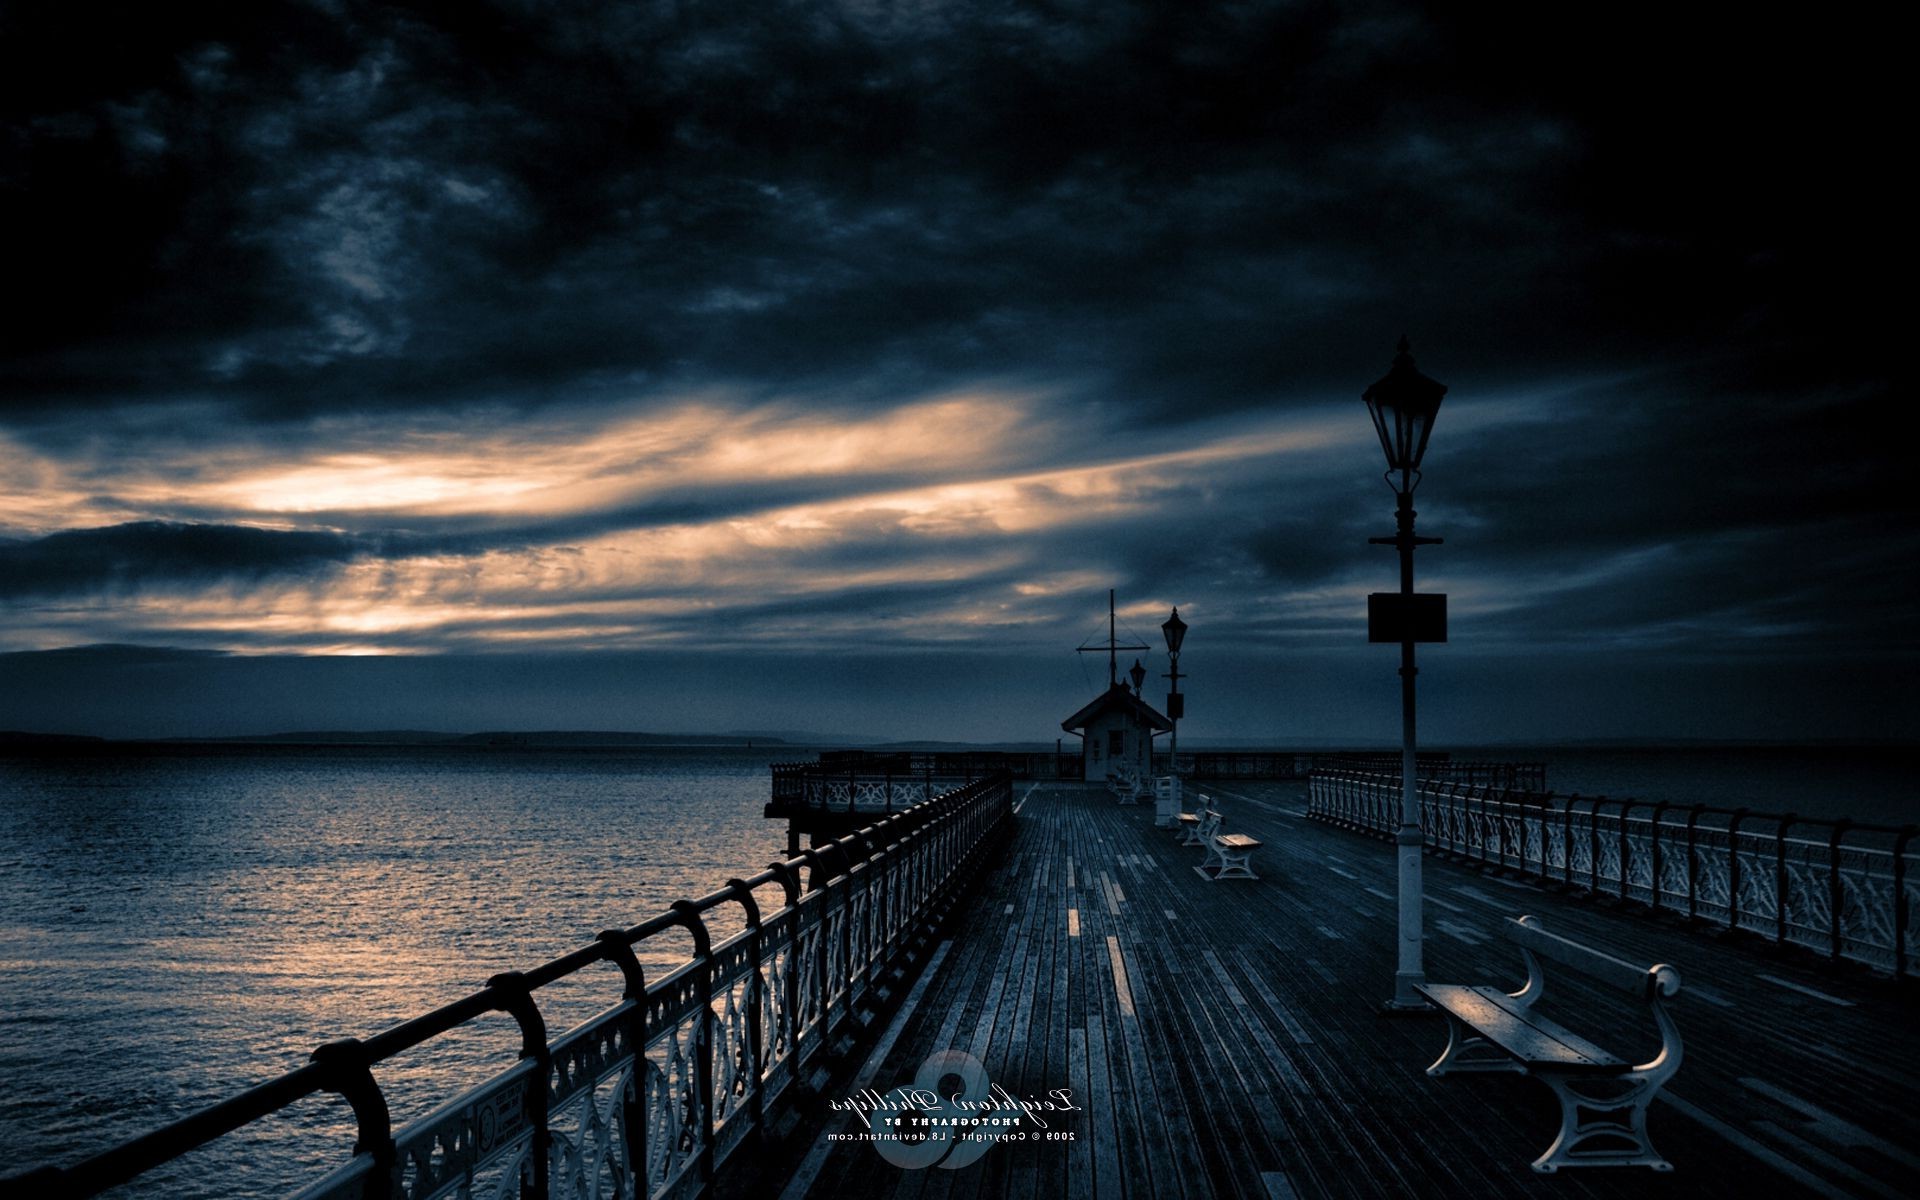 The old pier in the dark